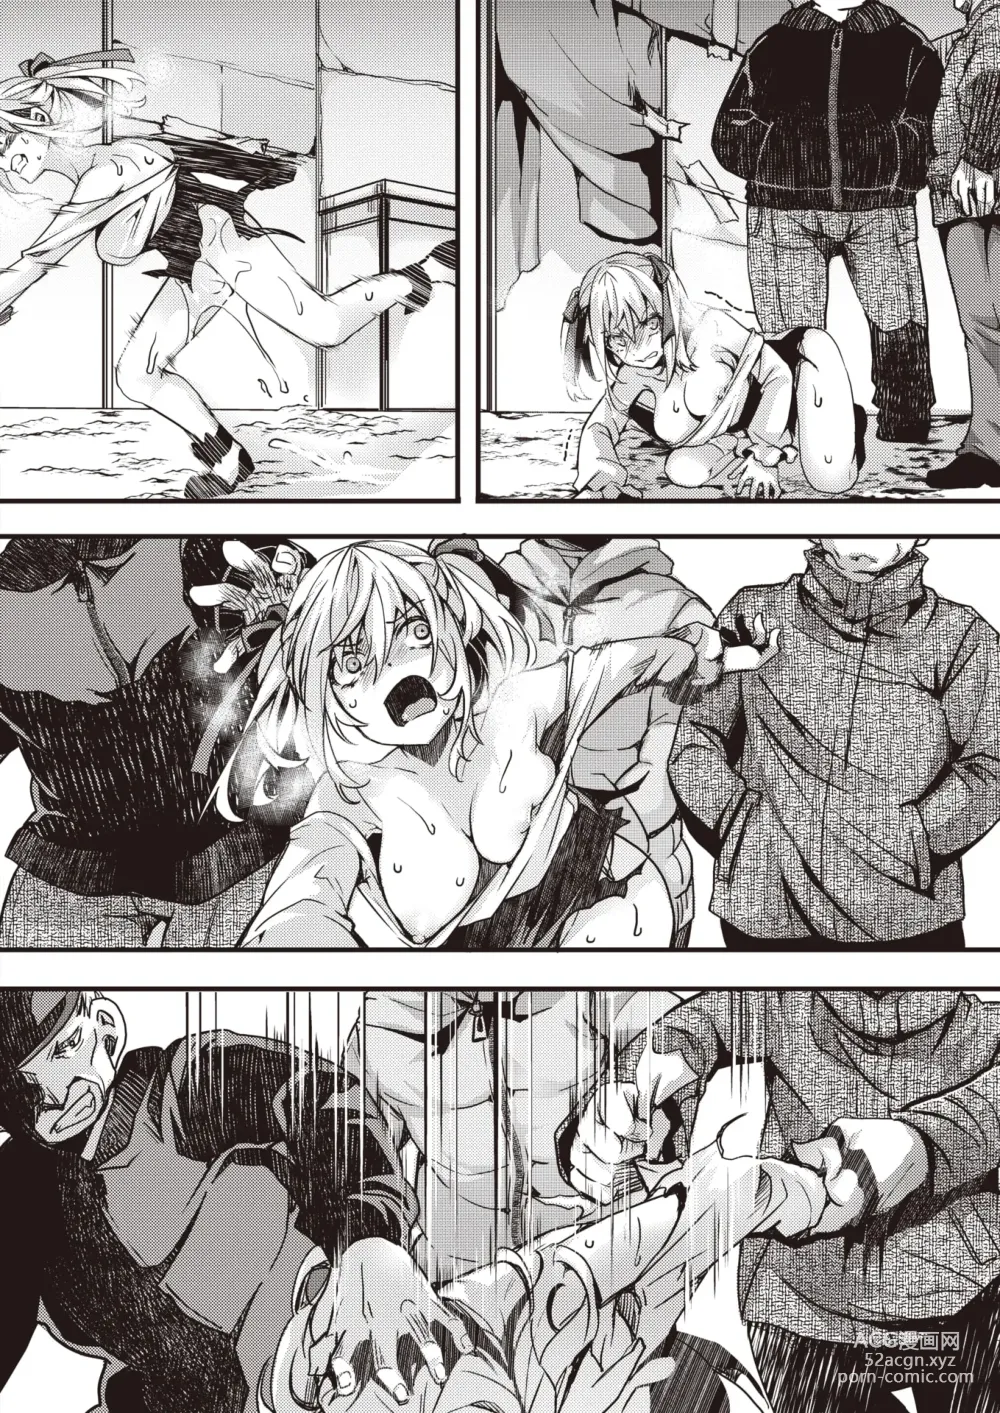 Page 12 of manga Itadaki Joou Mimi-chan vs Kouen Sumi Oji Rengou